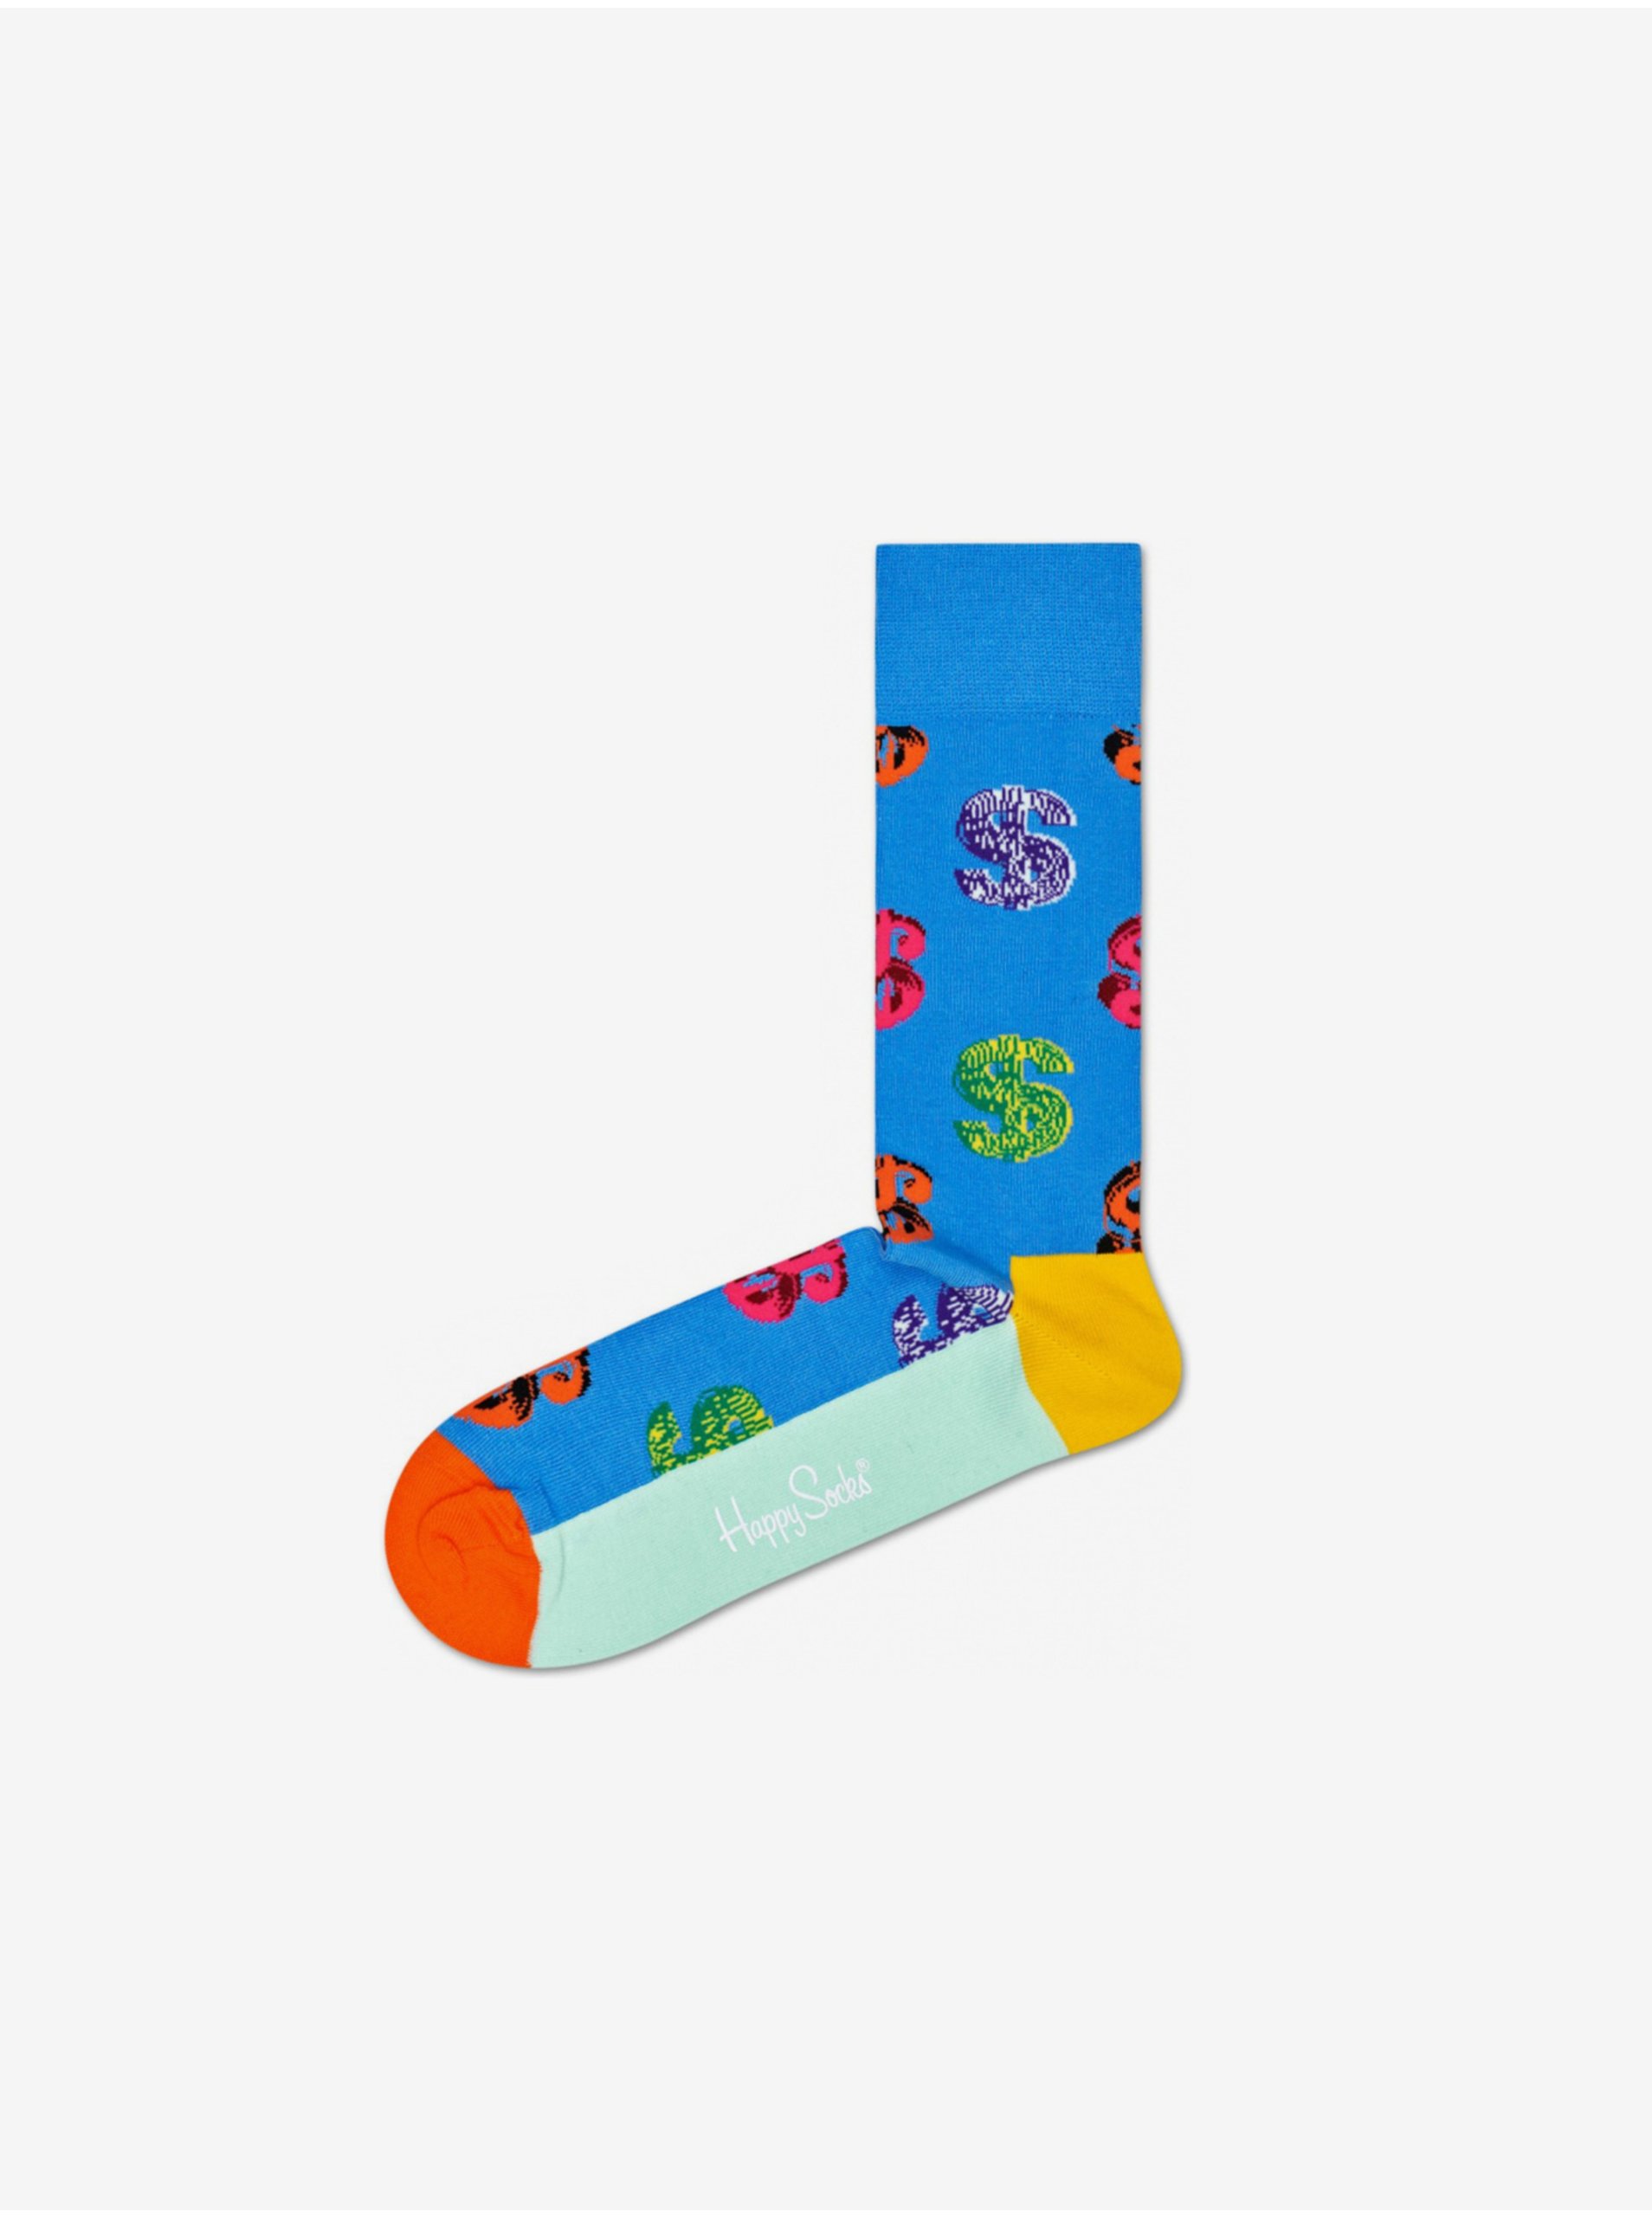 Lacno Andy Warhol Dollar Ponožky Happy Socks